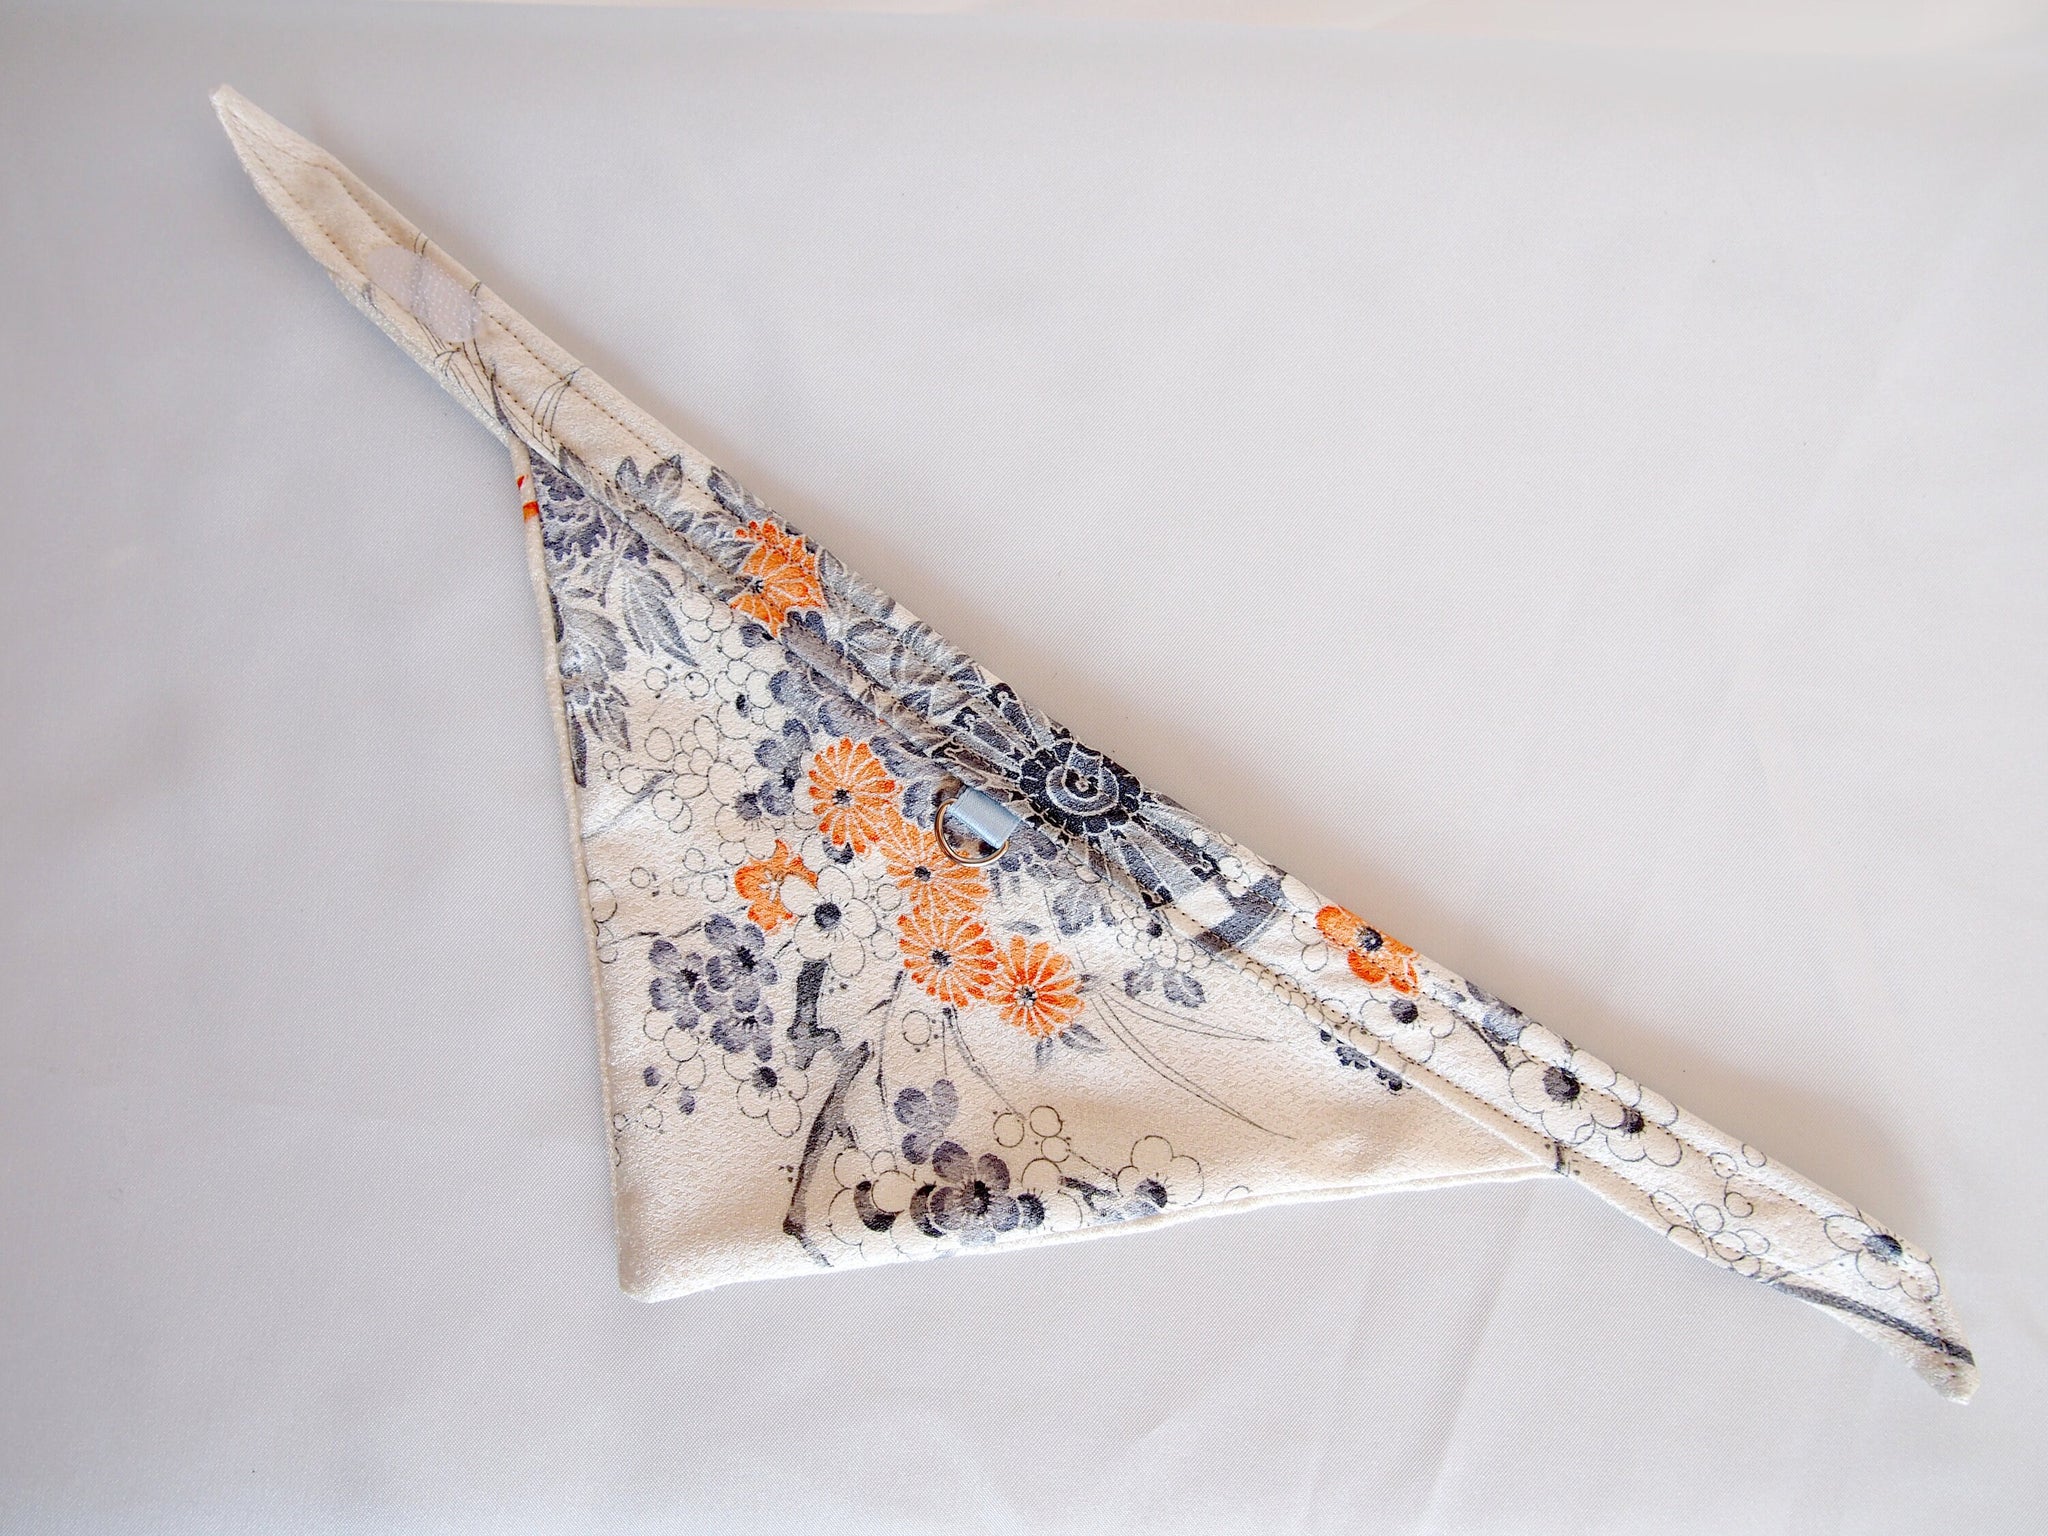 Vintage kimono bandana for pets - size S